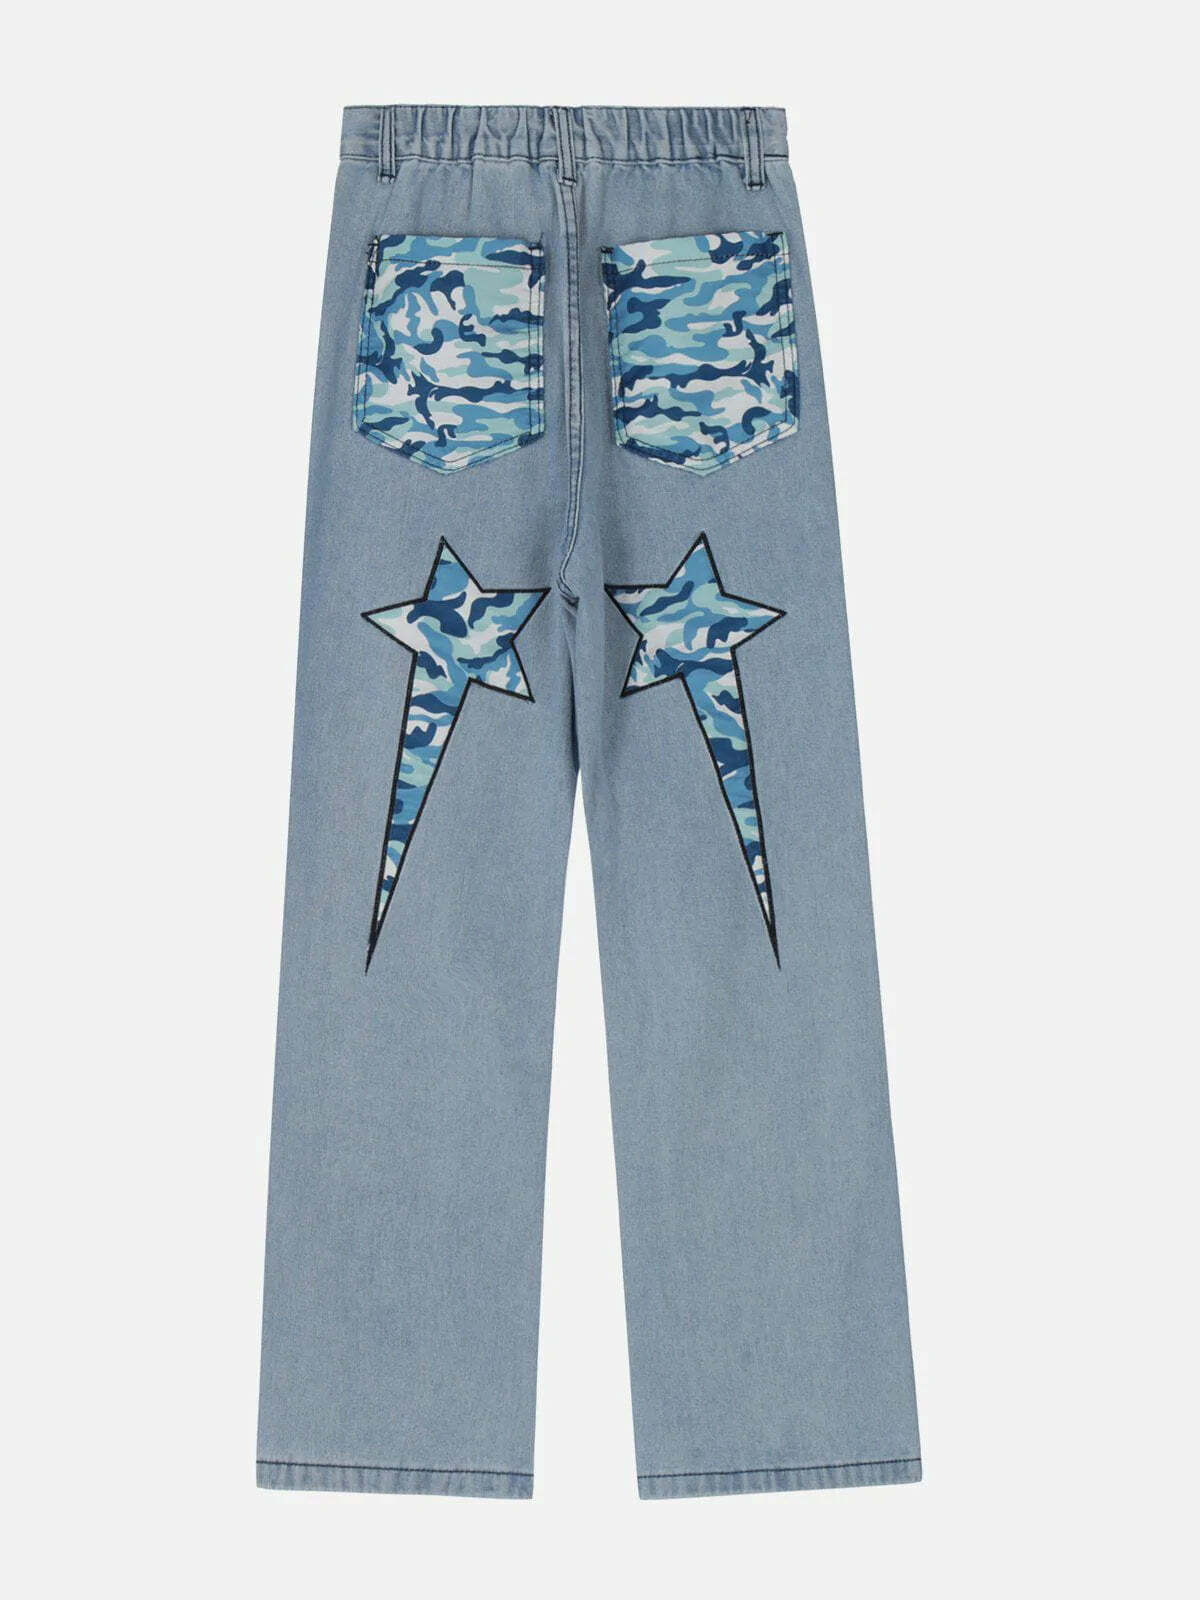 camo print elastic jeans edgy & versatile streetwear 4197